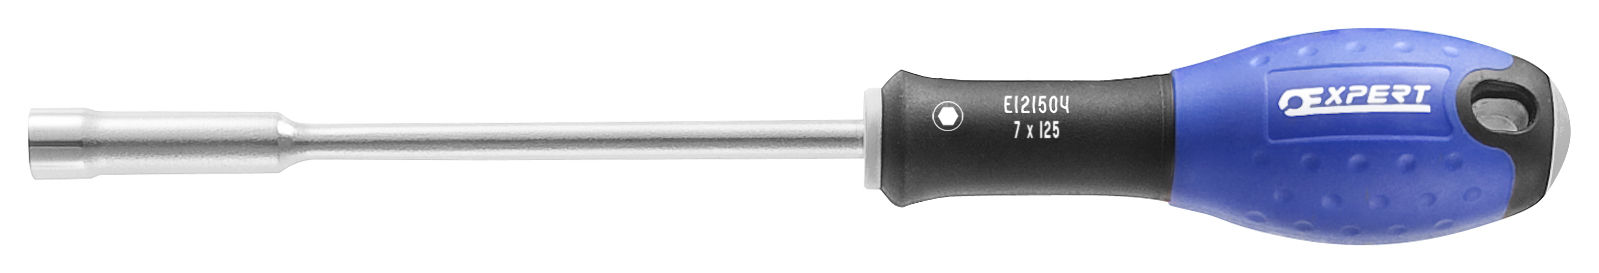 1.E121501 Dopsleutel met handvat - metrisch - 5 mm